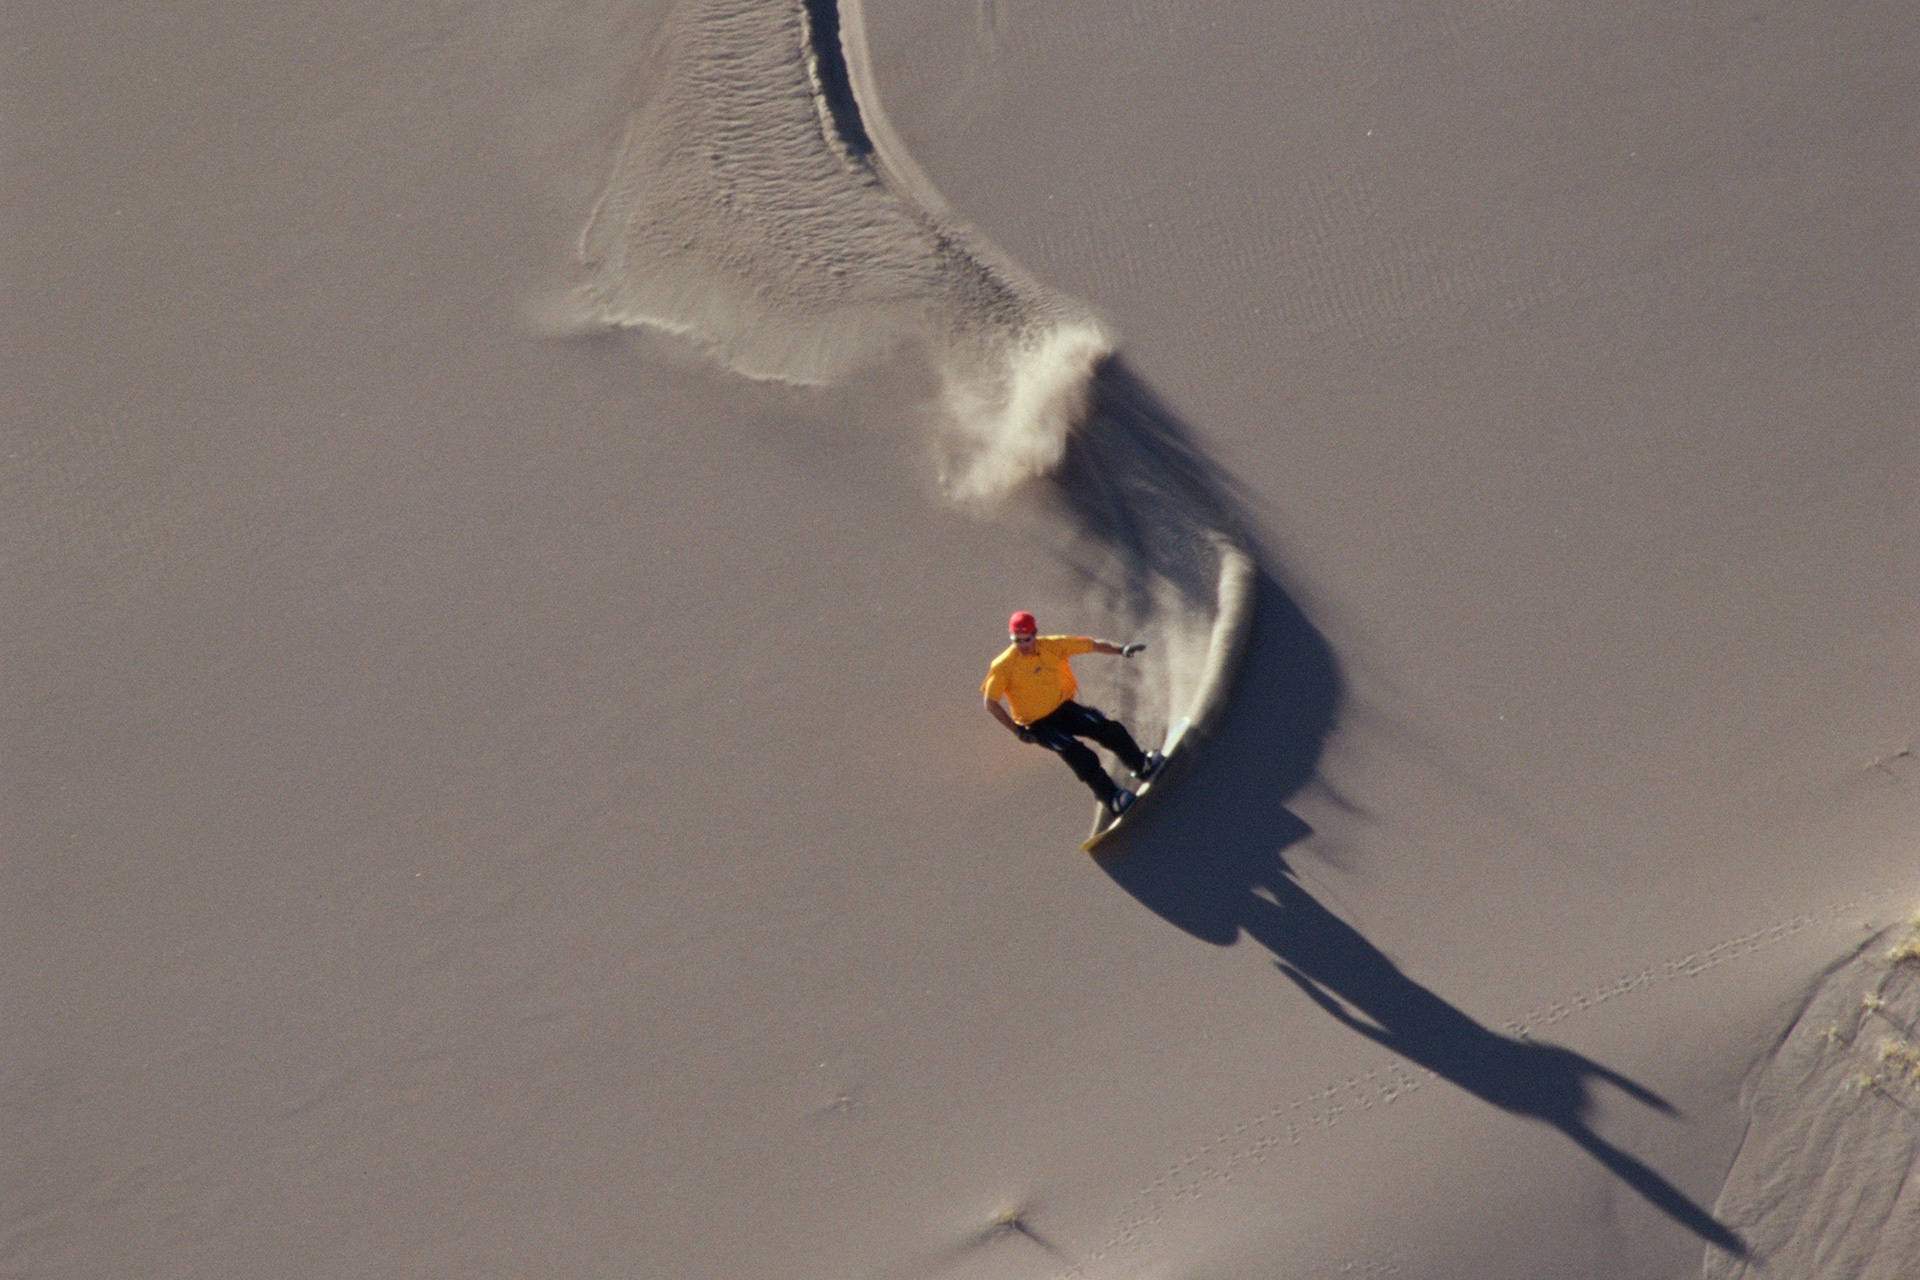 Colorado's Sand Dunes Skiing Background